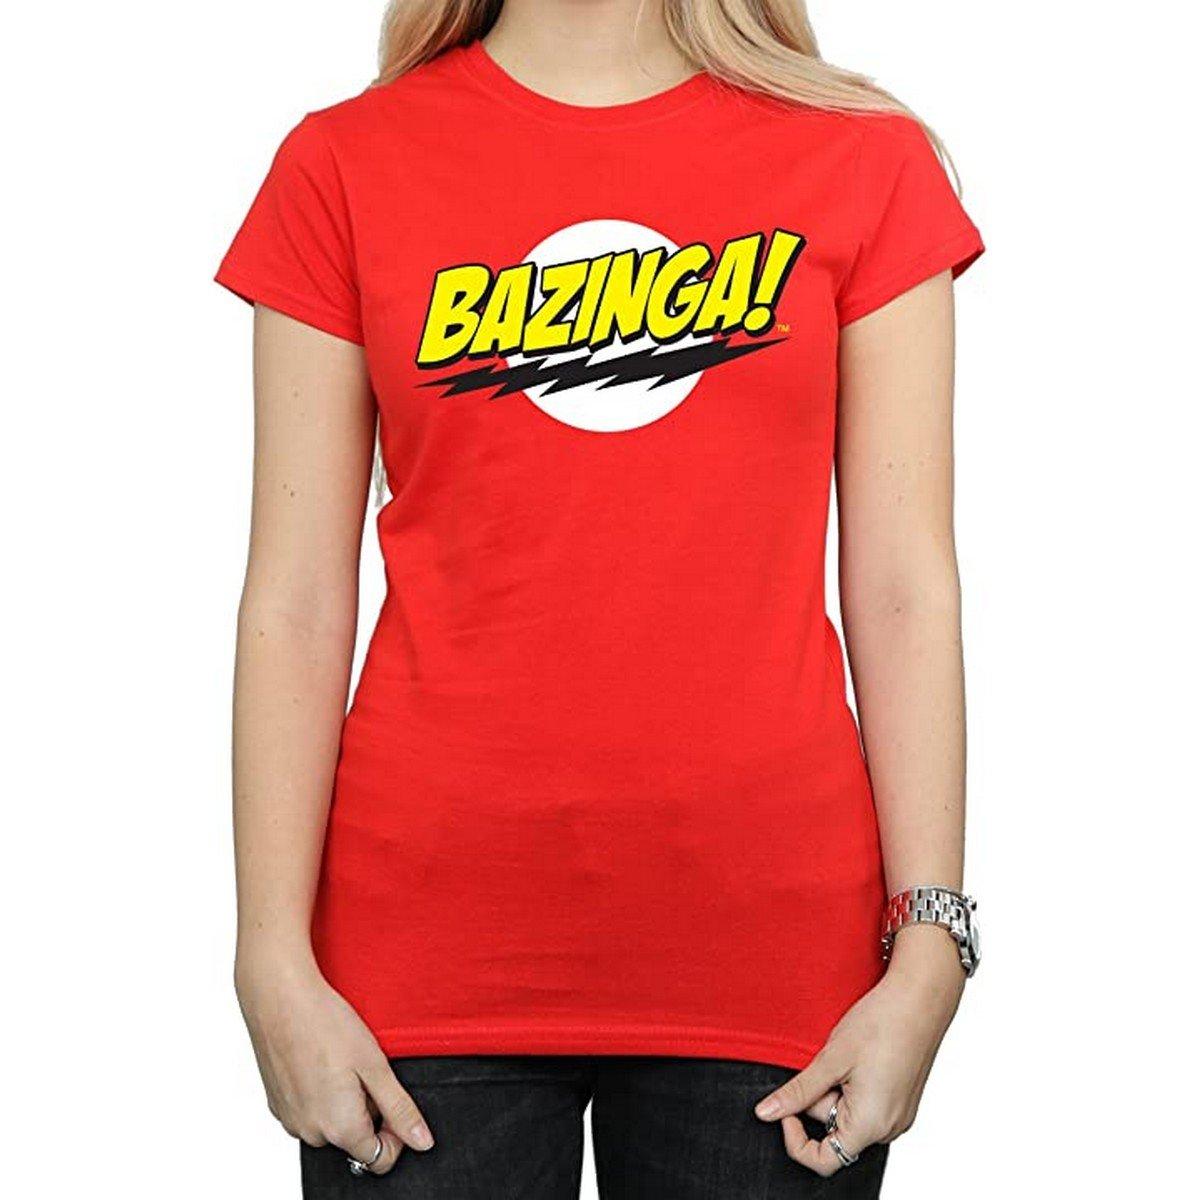 Bazinga Tshirt Damen Rot Bunt XL von The Big Bang Theory